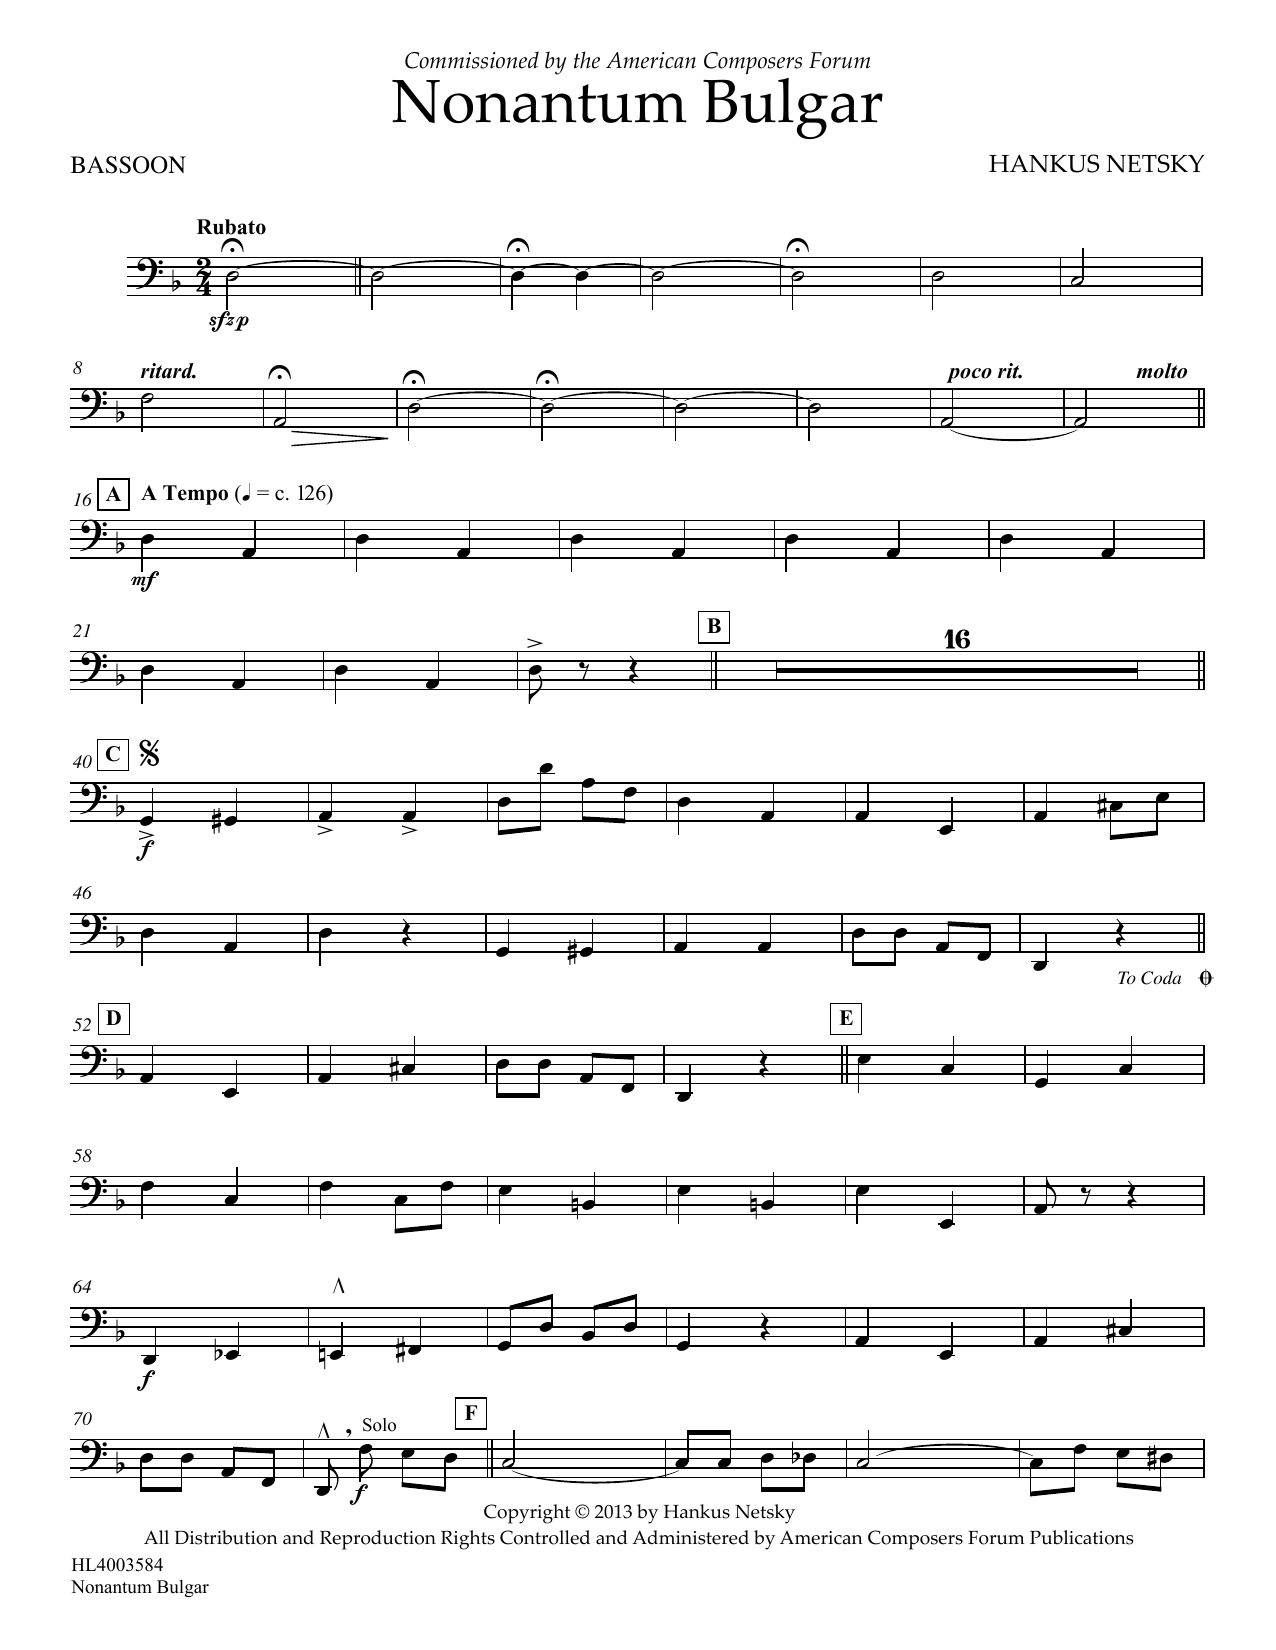 Hankus Netsky Nonantum Bulgar - Bassoon sheet music notes and chords arranged for Concert Band